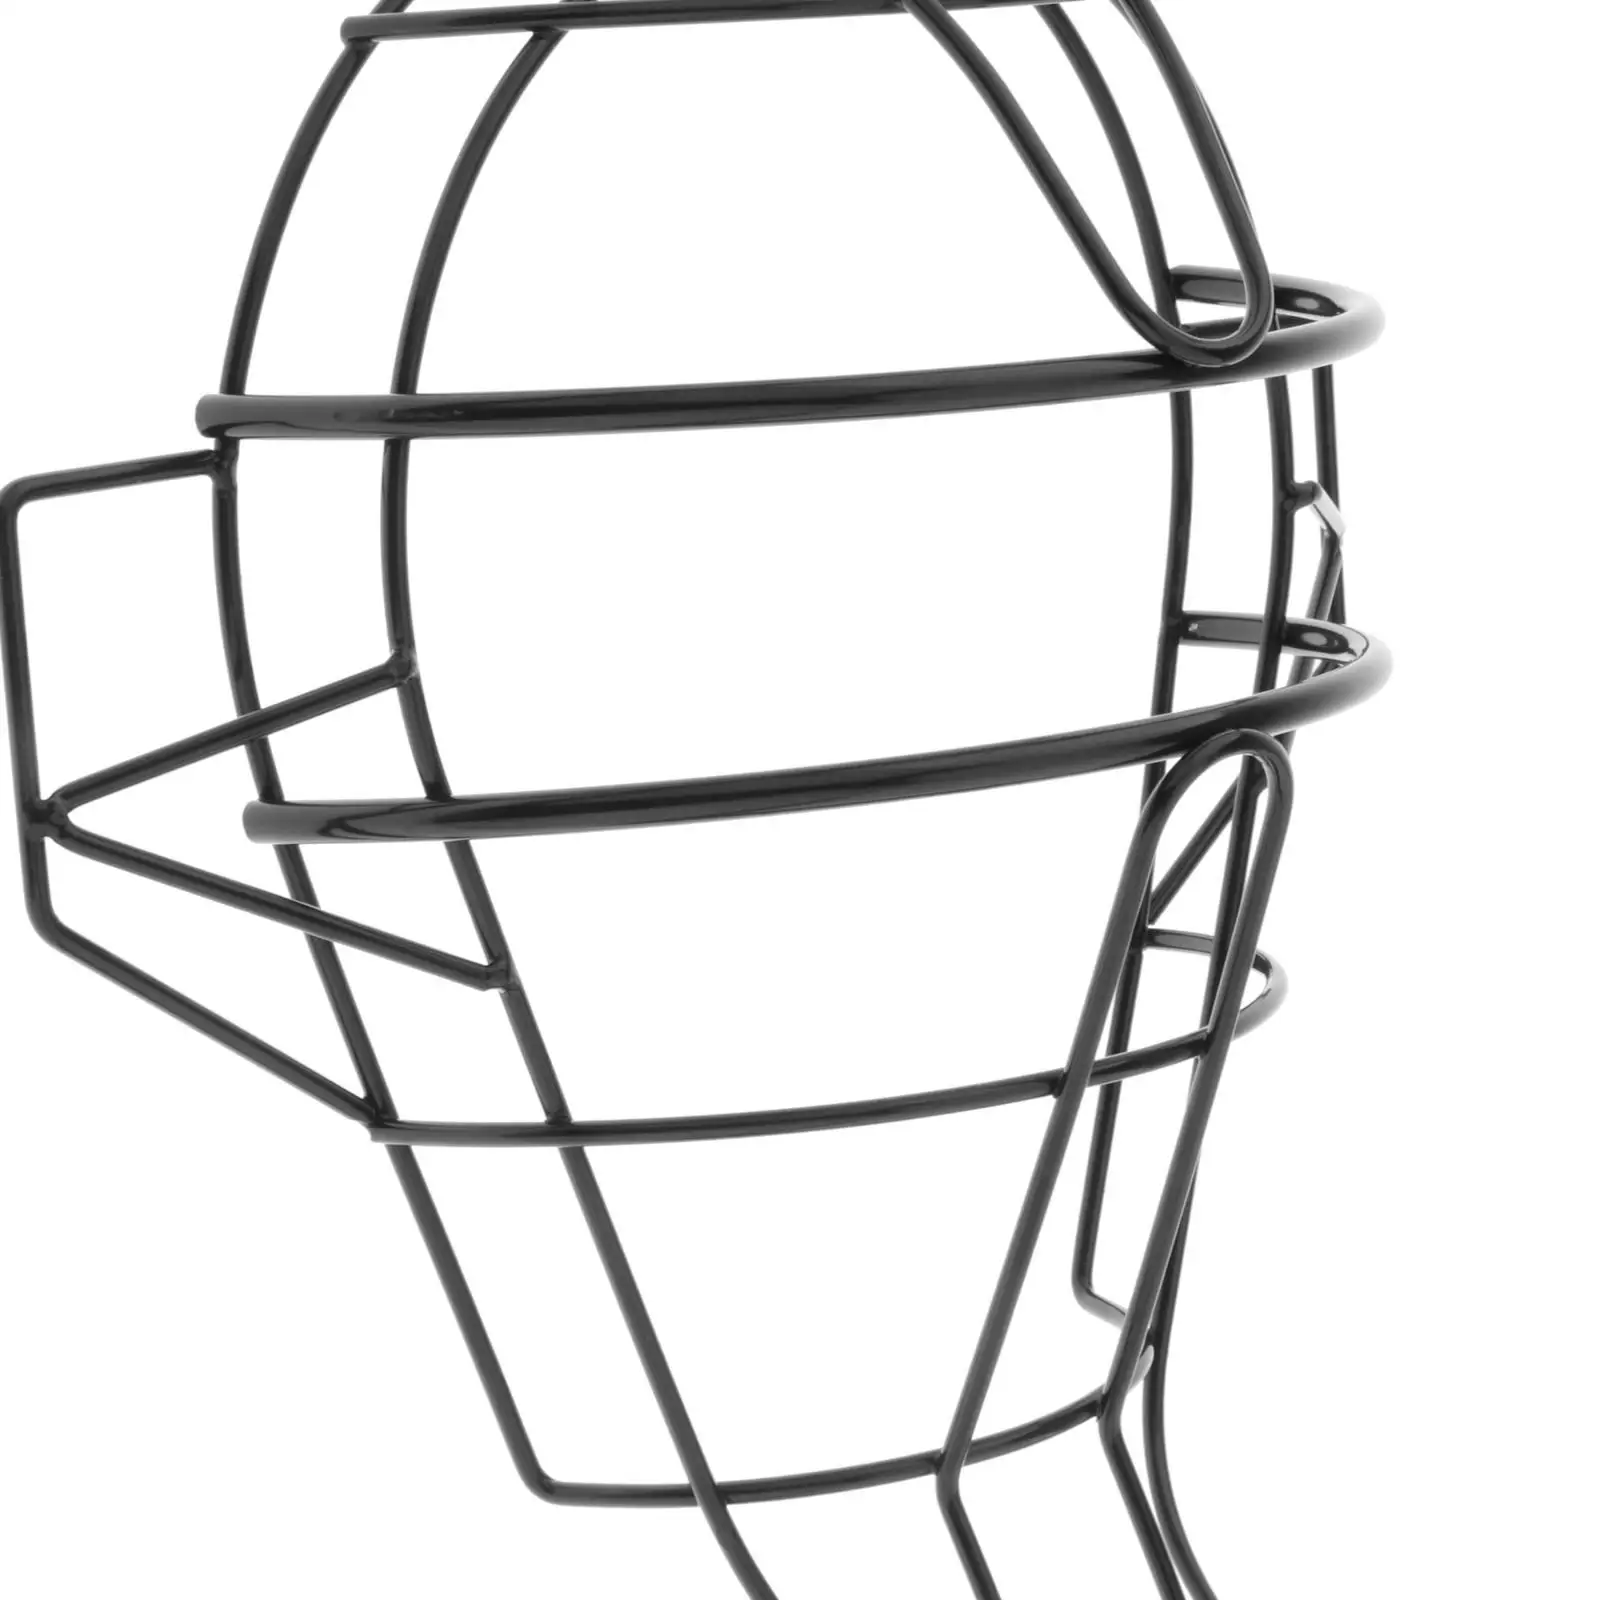 Universal Helmet Face Guard Baseball Softball Protection Shield Unisex